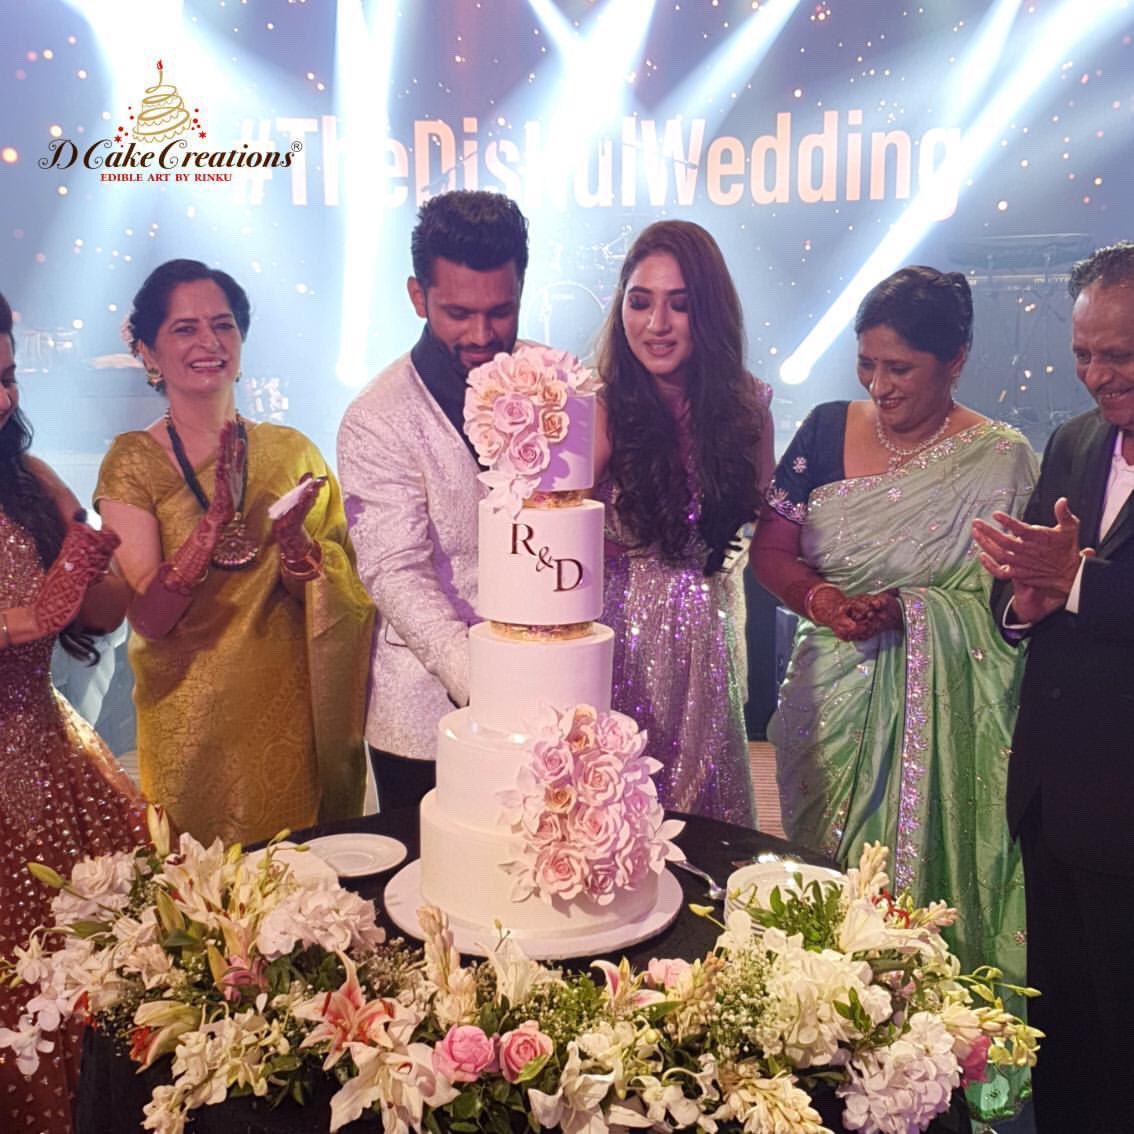 The #weddingcake for @rahulvaidya23 and @disha11parmar 
#thedishulwedding 

#edibleartbyrinku #thedishulweddingedits #rahulvaidyawedsdishaparmar #mumbaiwedding #celebritywedding